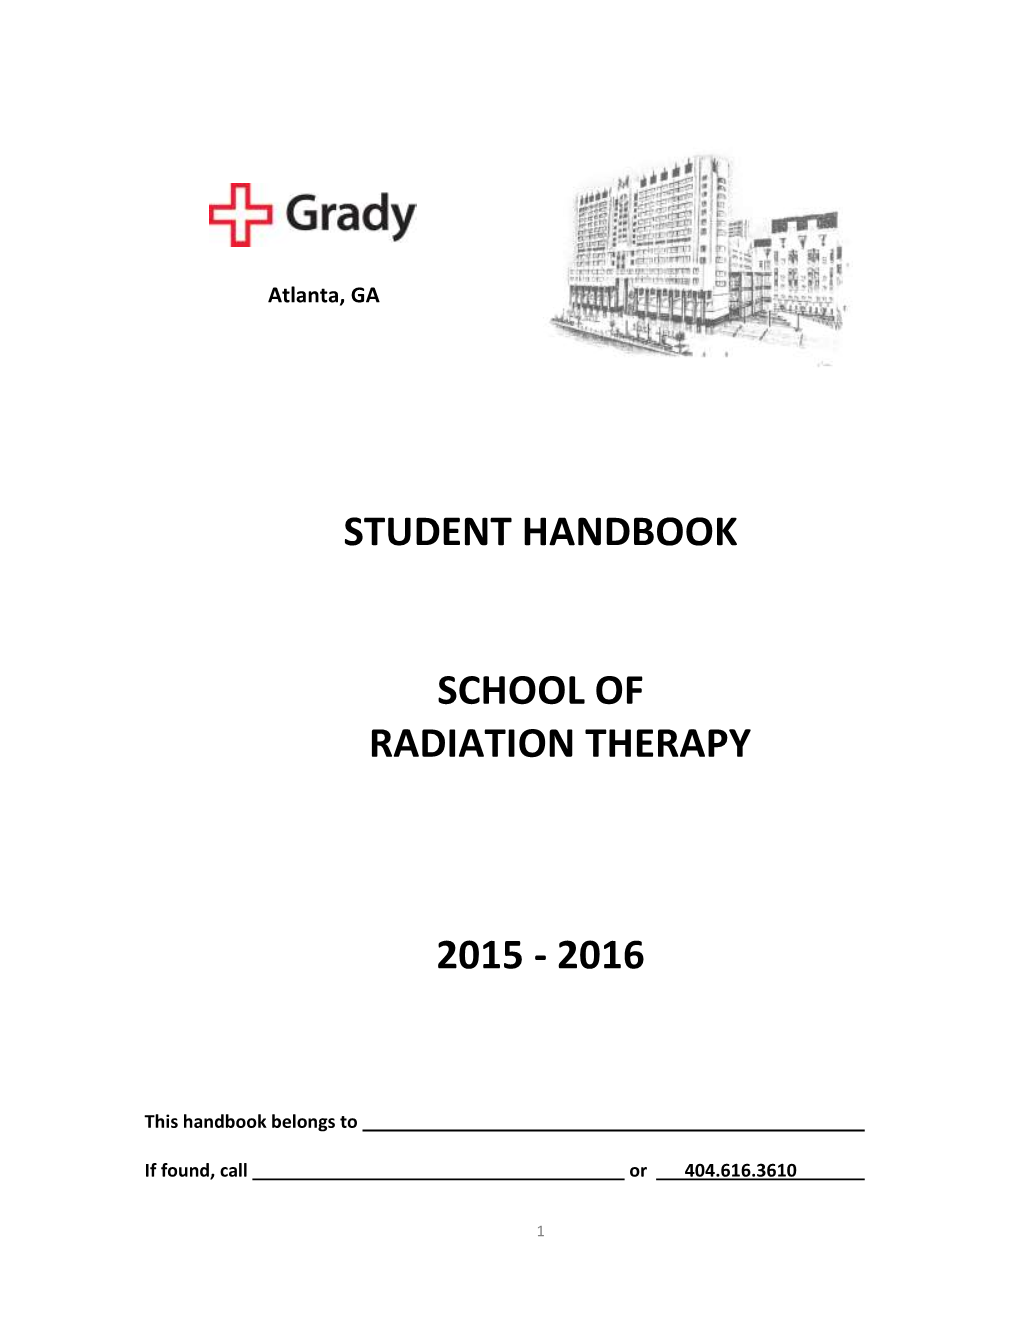 Student Handbook School of Radiation Therapy 2015